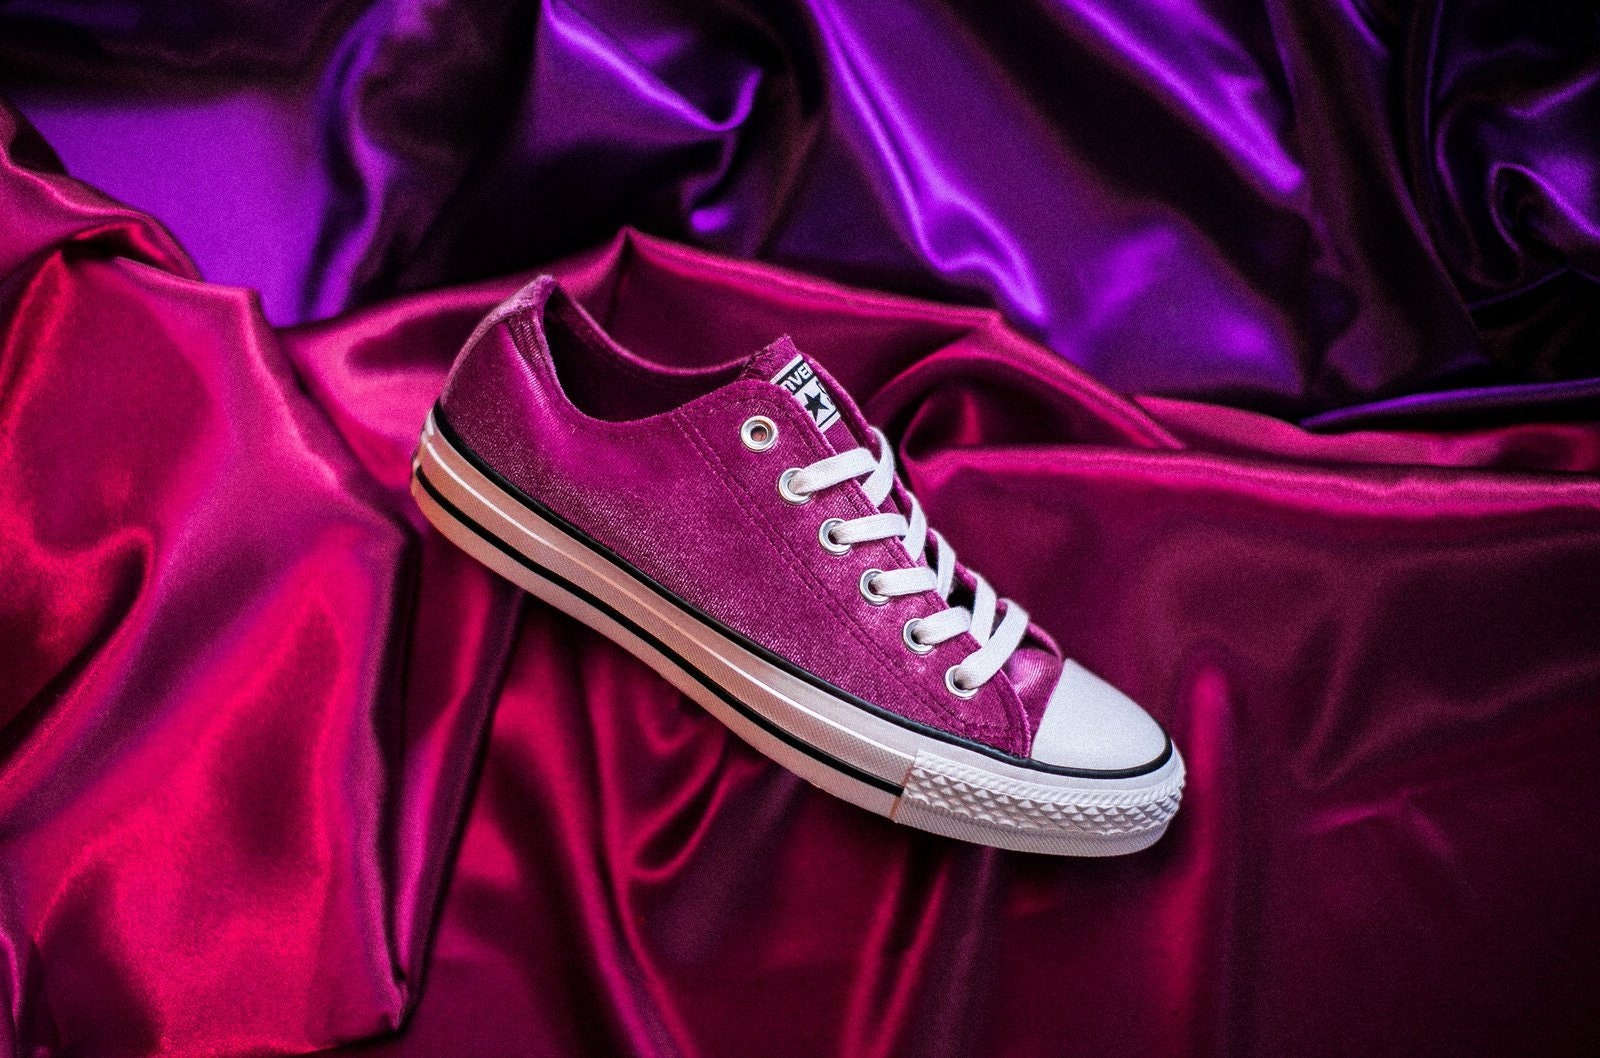 pink velvet converse